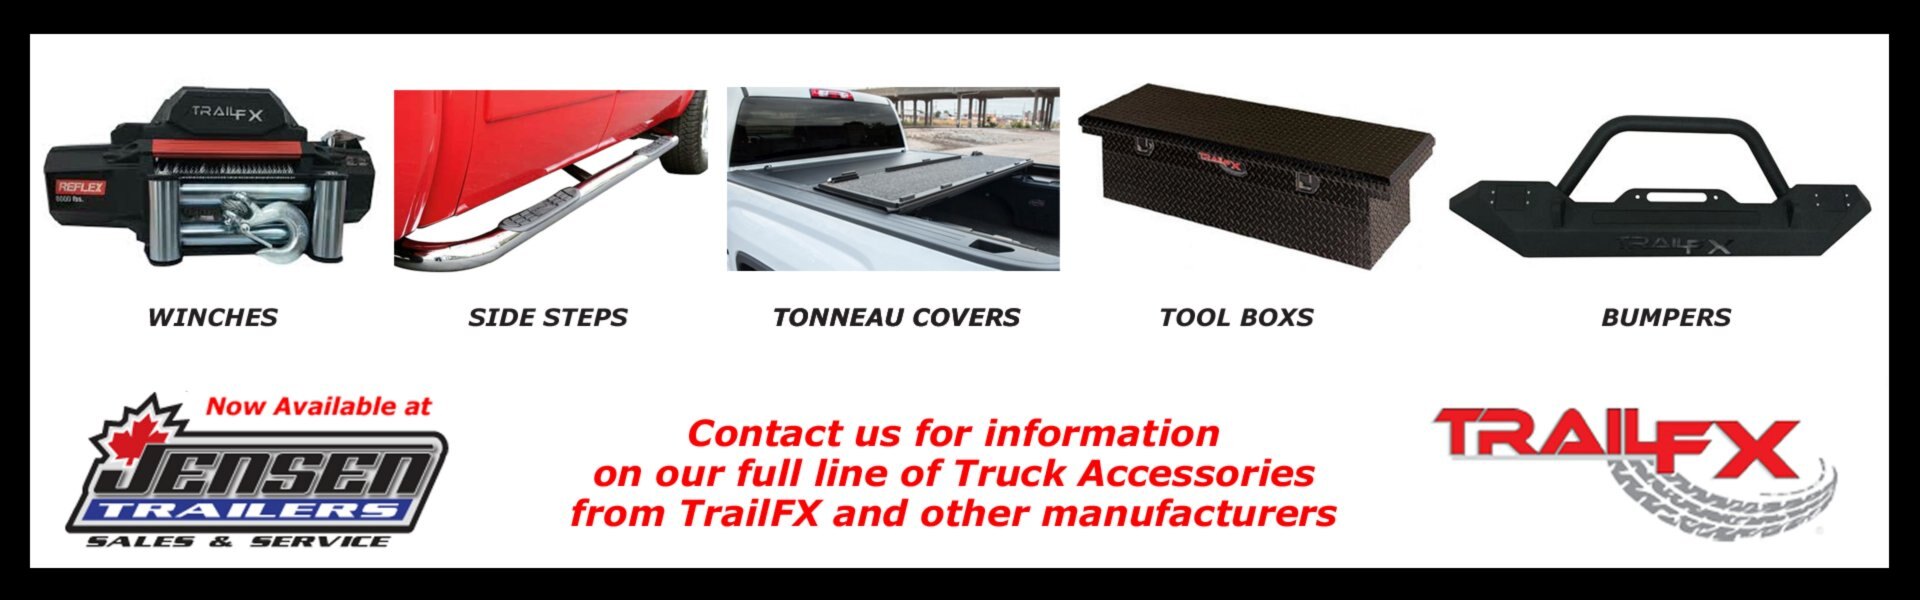 Truck Accessories_1920x600.jpg